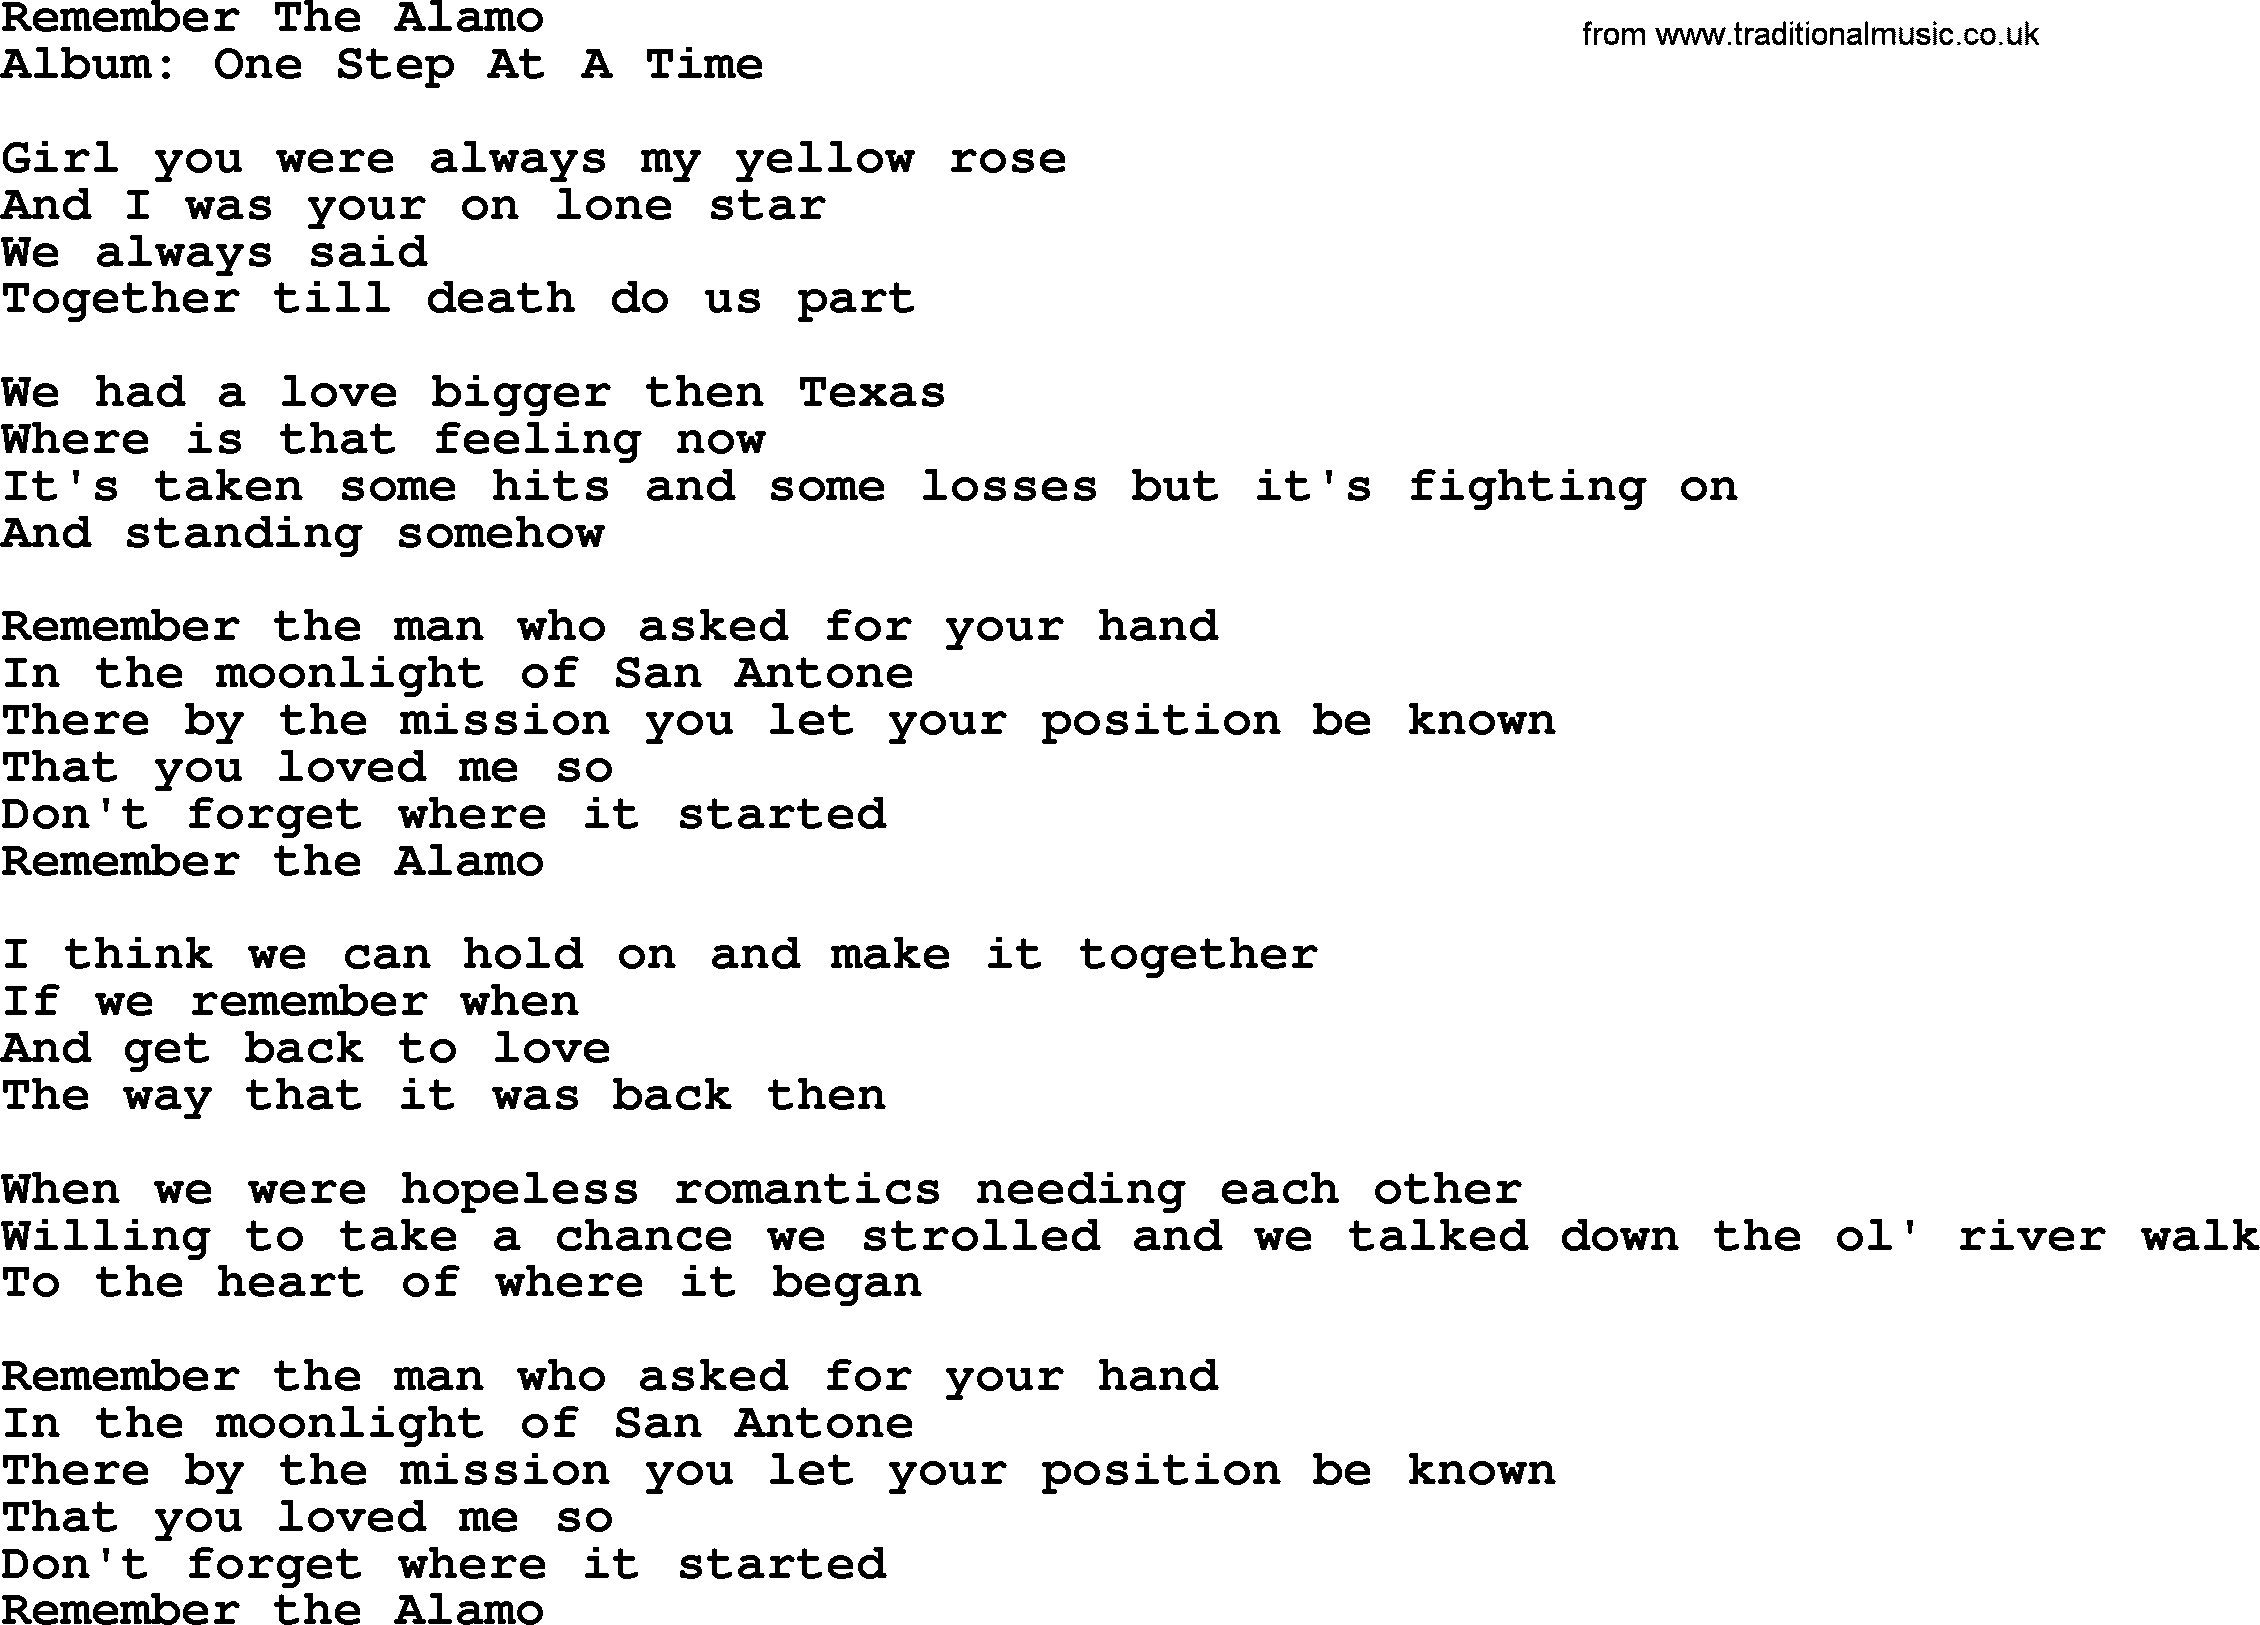 George Strait song: Remember The Alamo, lyrics